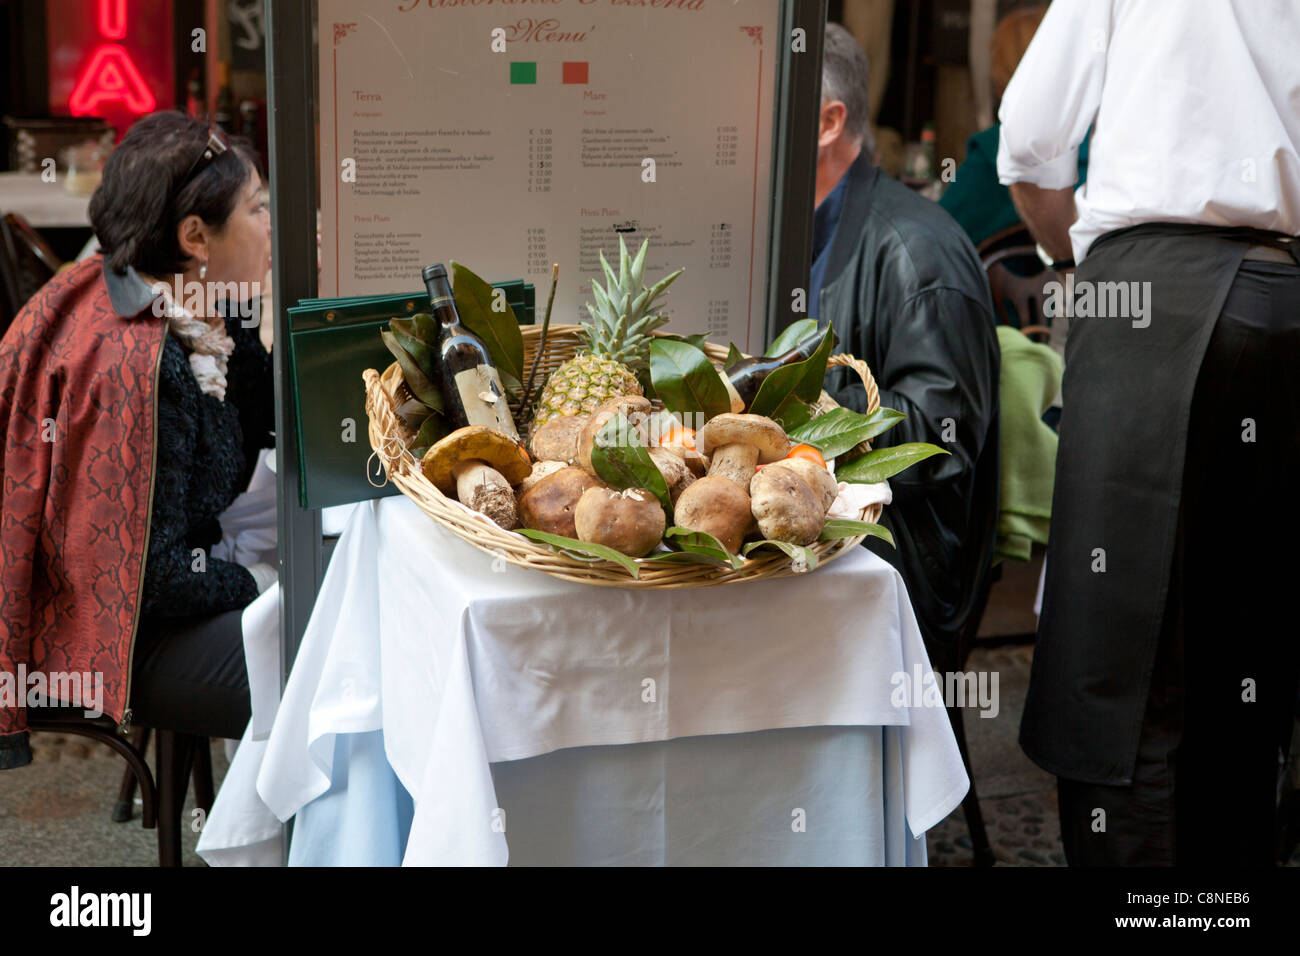 Brera district in Milan, Italy. Restaurant in the street exposing boletus fungi as main dish ingredients Stock Photo